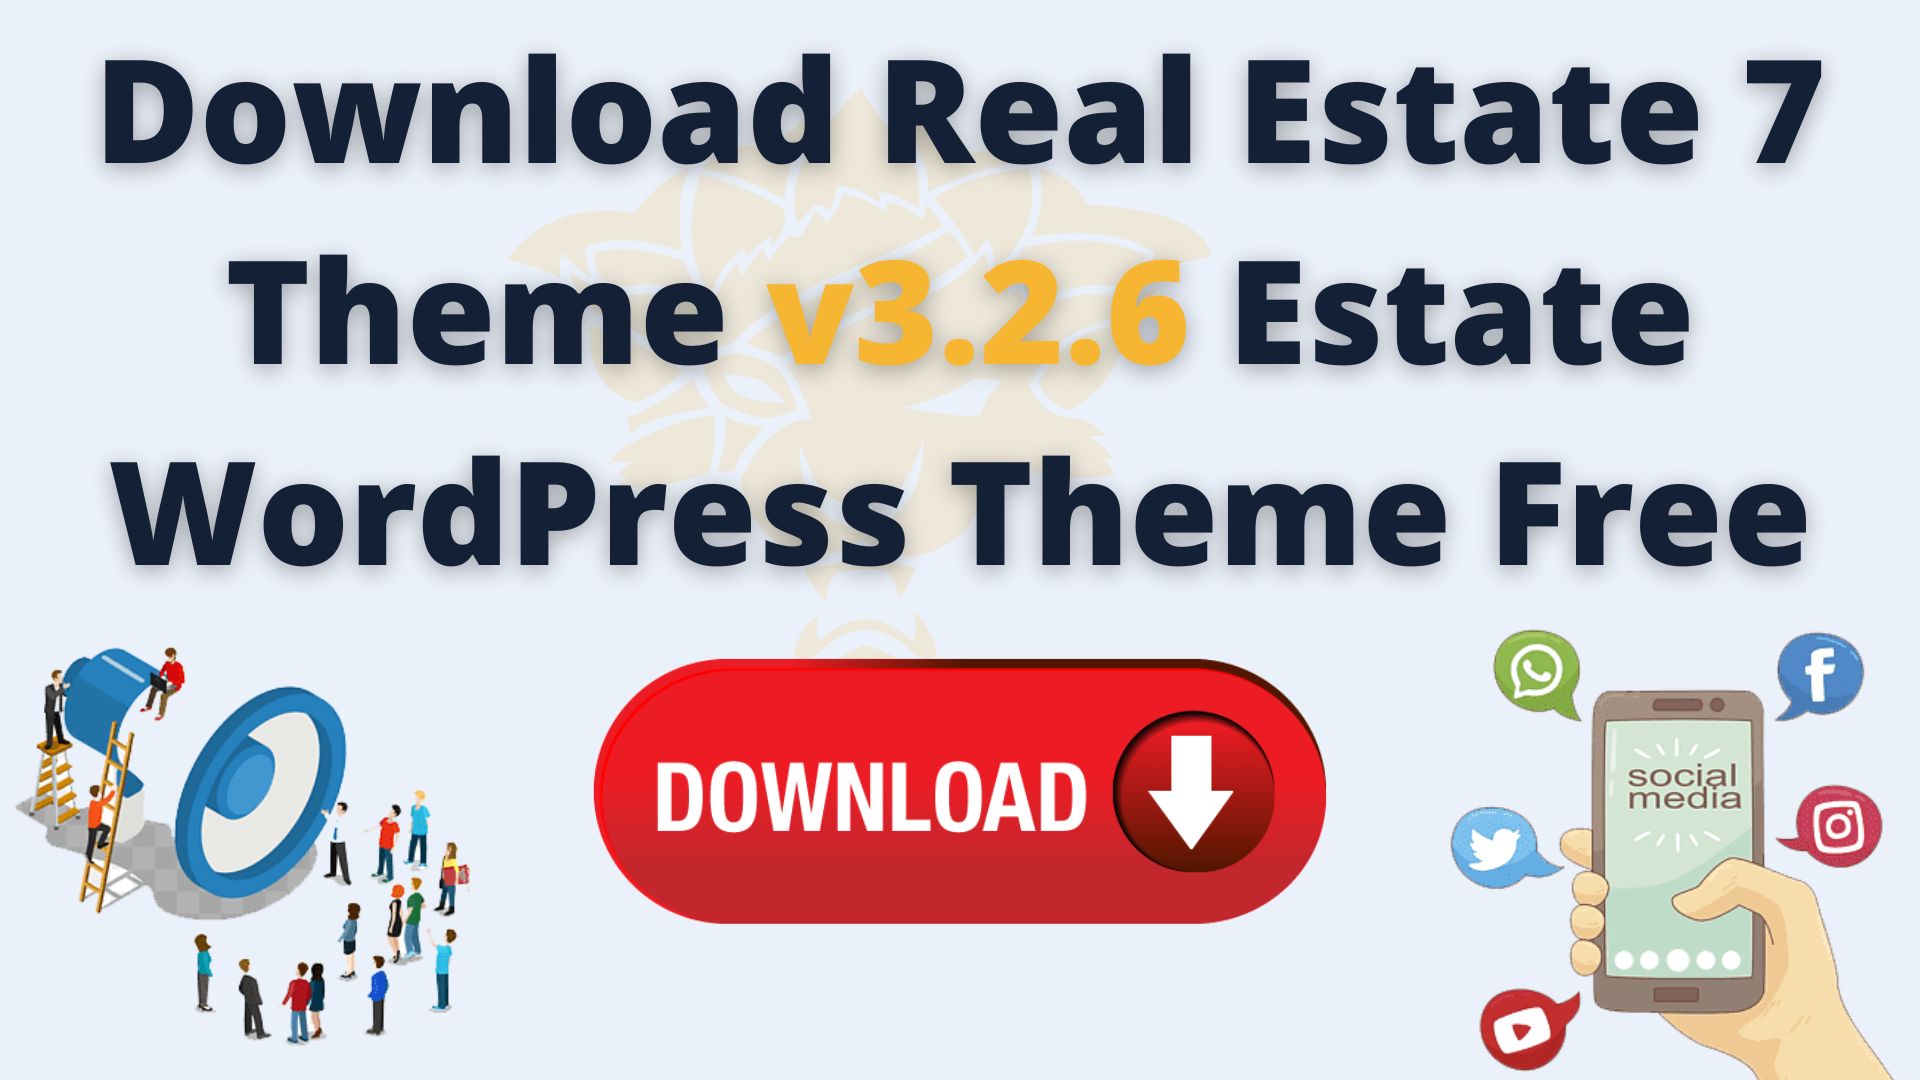 Download real estate 7 theme v3. 2. 6 estate wordpress theme free